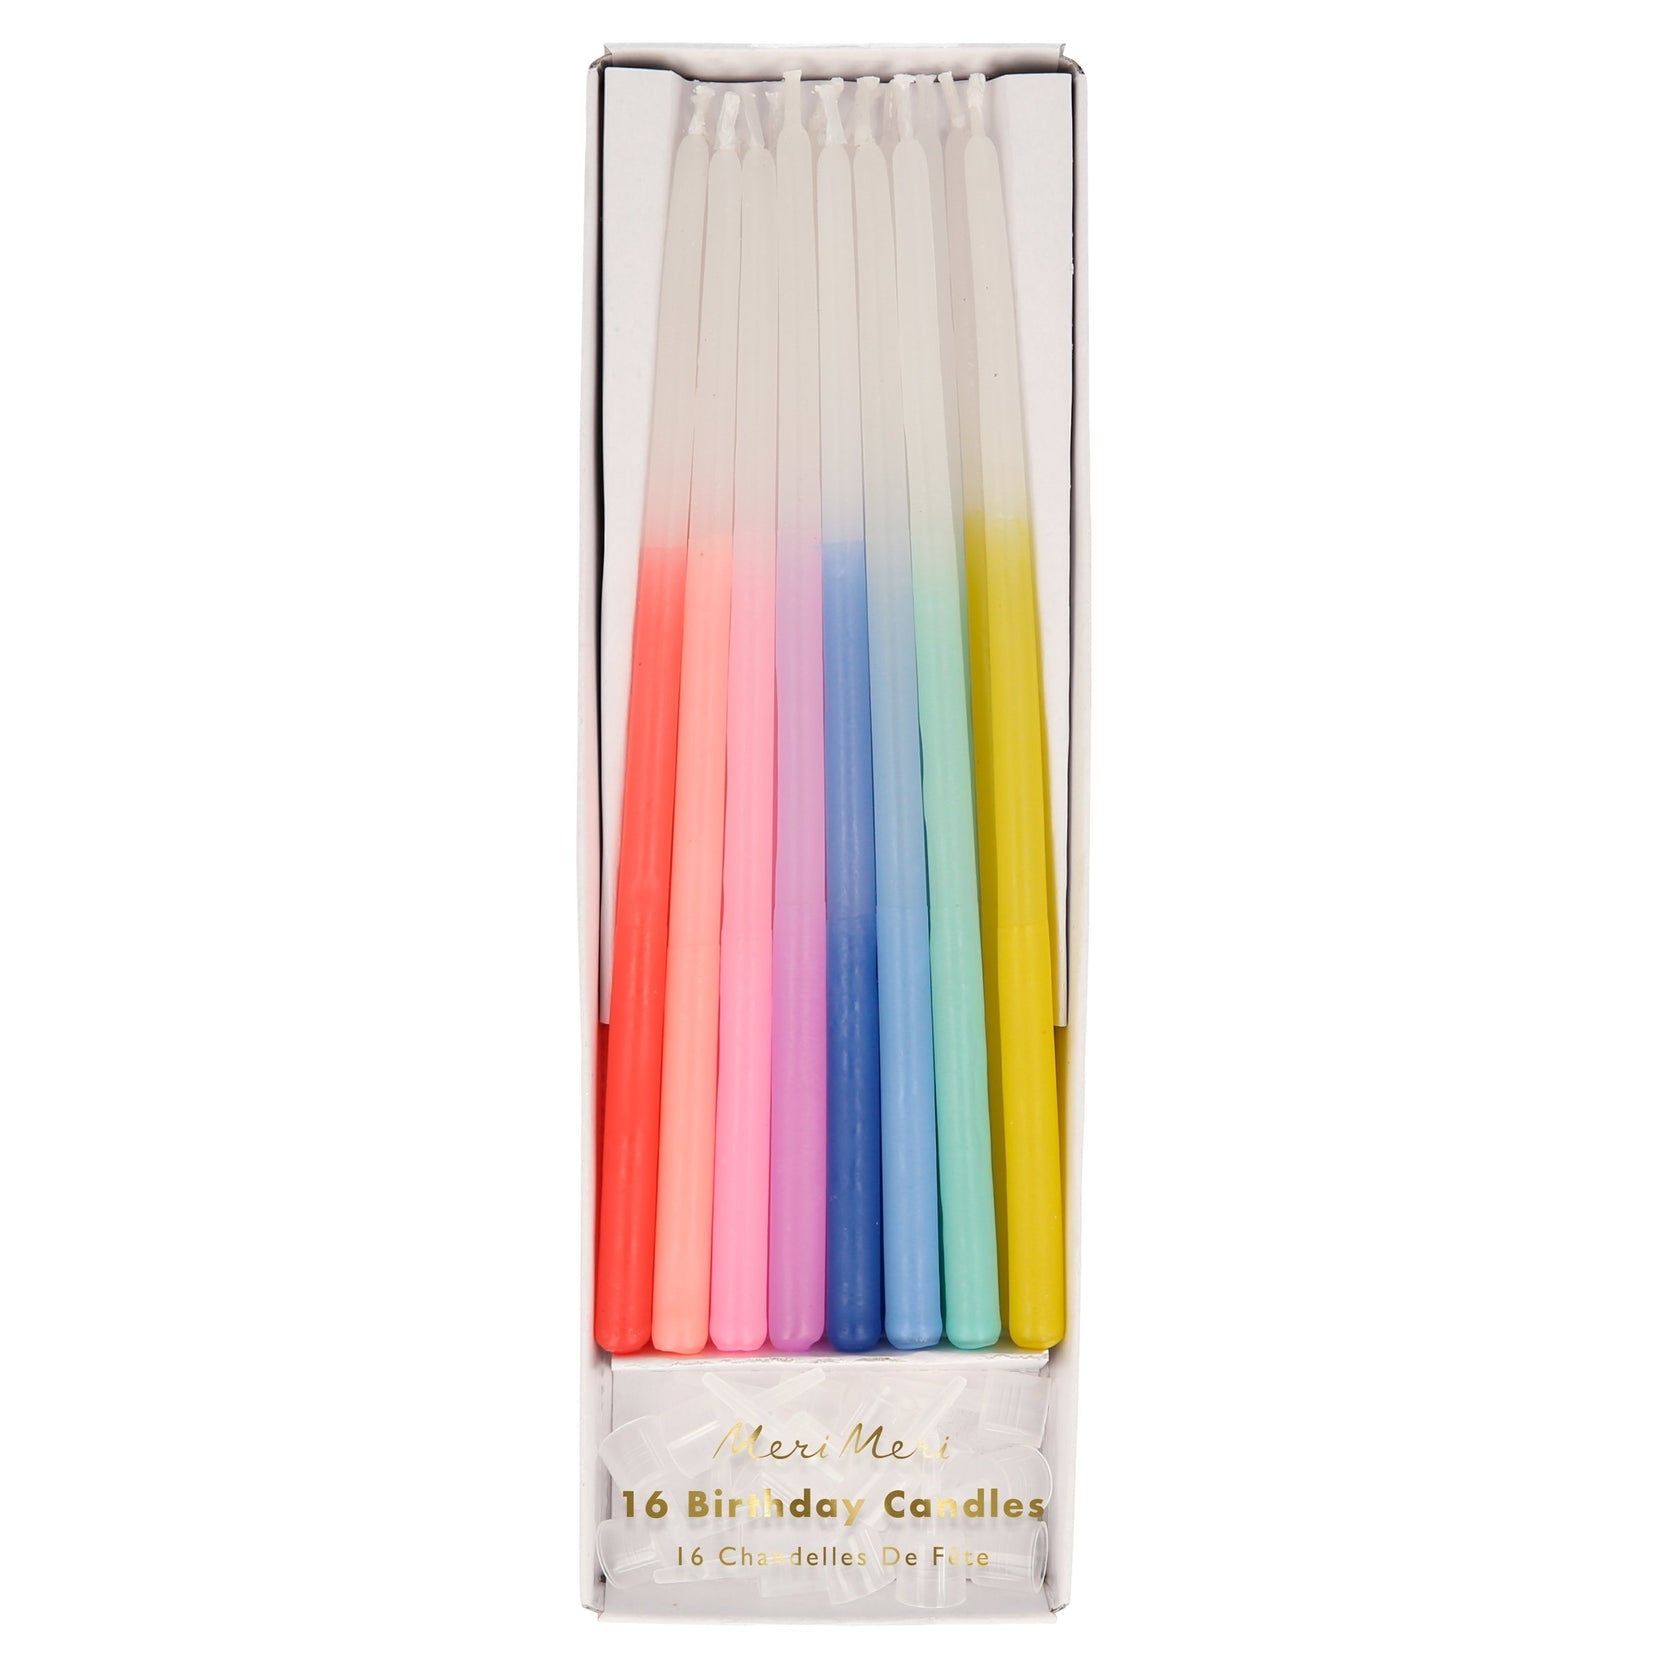 Meri Meri Rainbow Dipped Tapered Candles x16